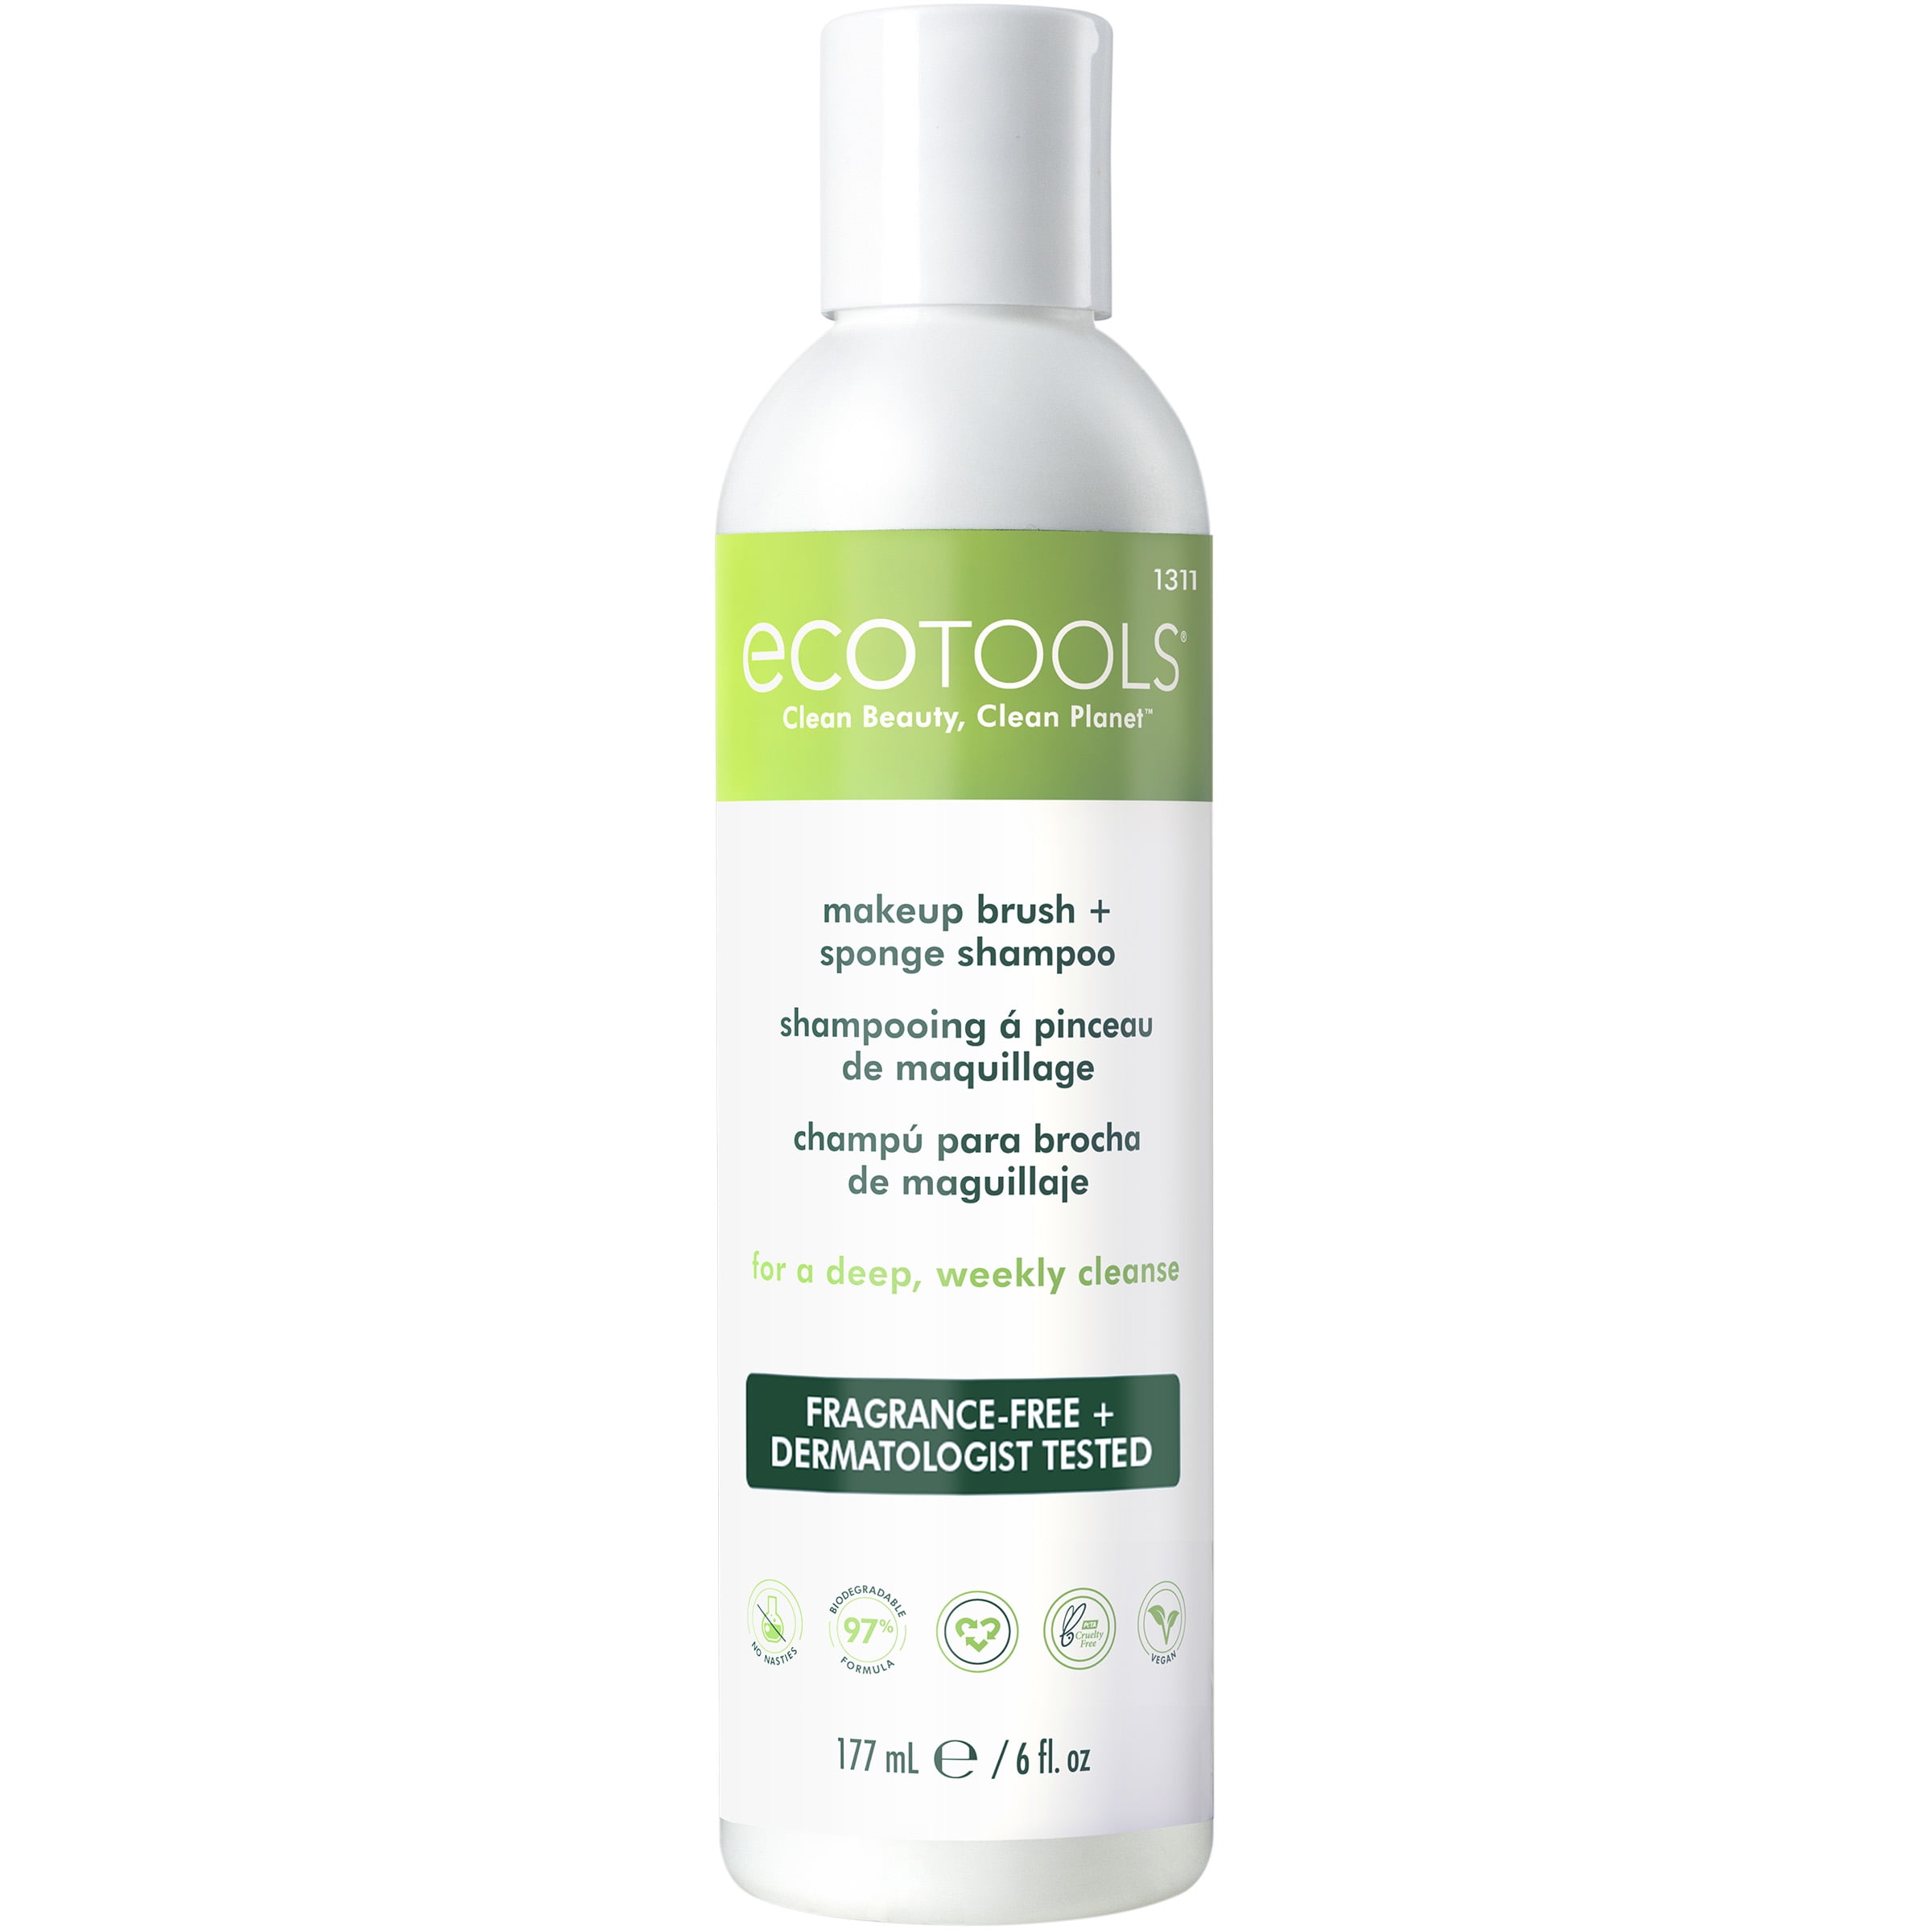 EcoTools Makeup Brush + Sponge Shampoo, Cleanser for Brushes & Sponges, 6 fl.oz./177 ml, 1 Count